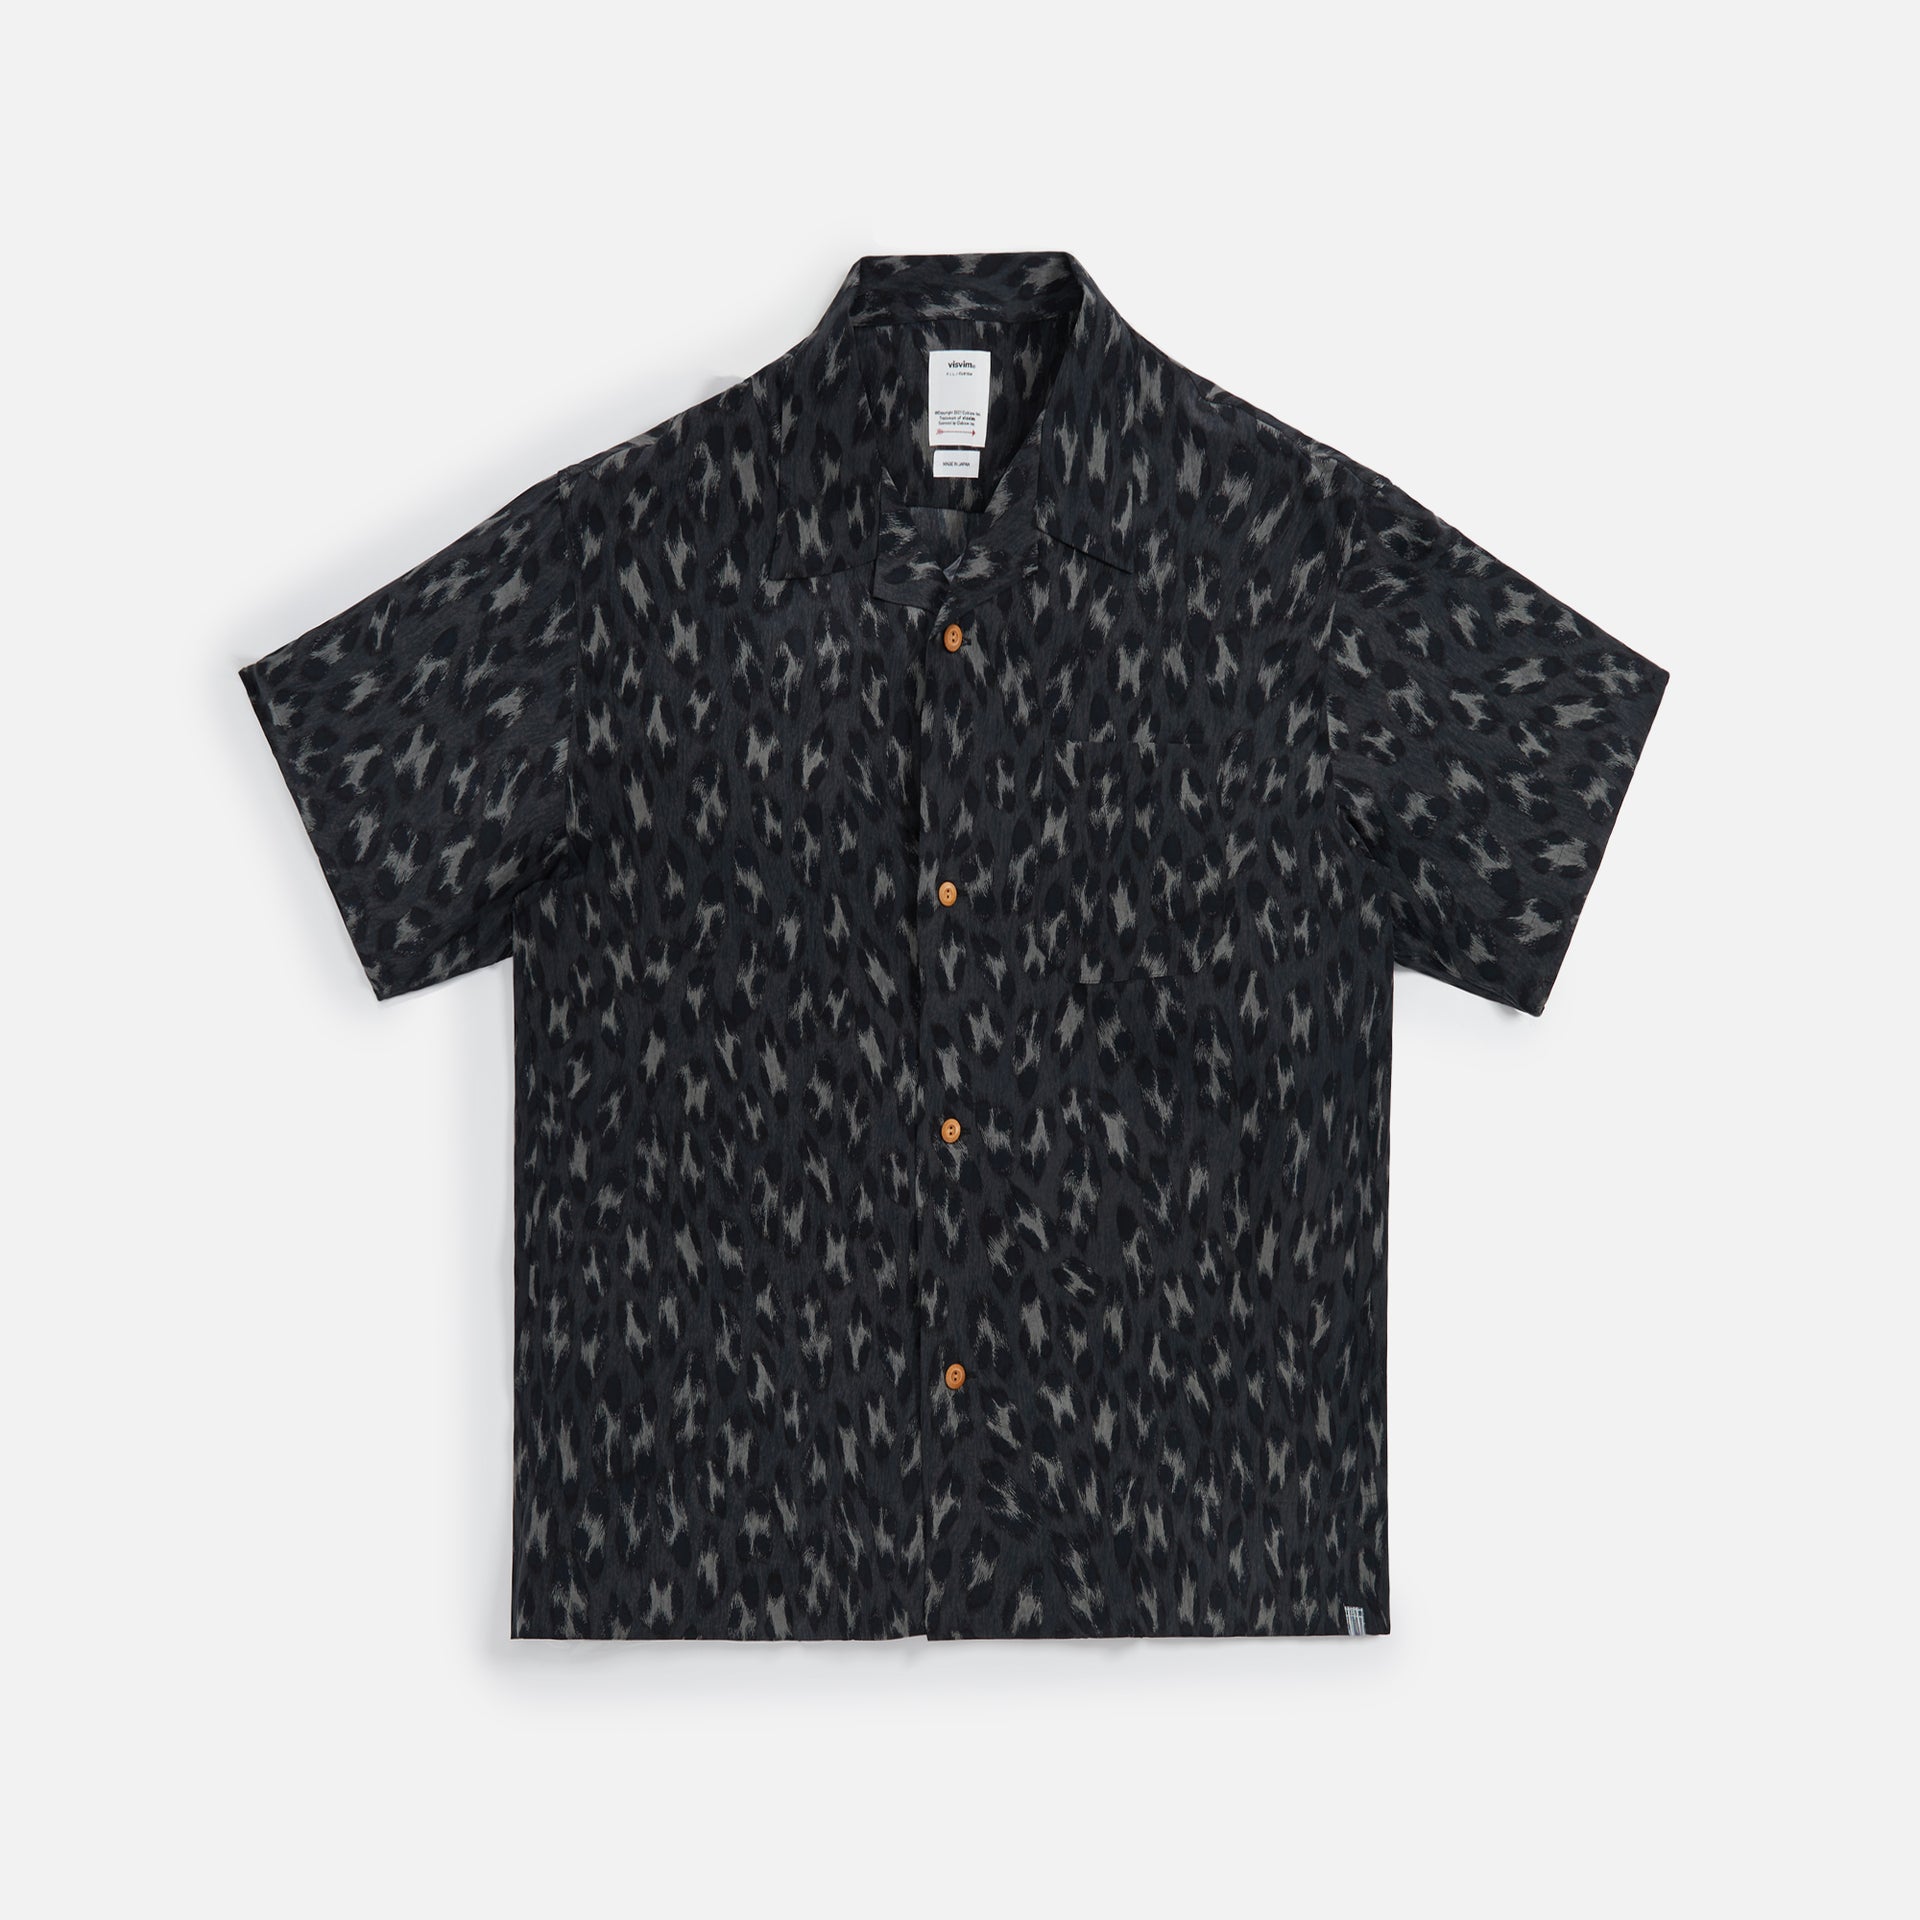 Visvim Caban Leopard Shirt - Black